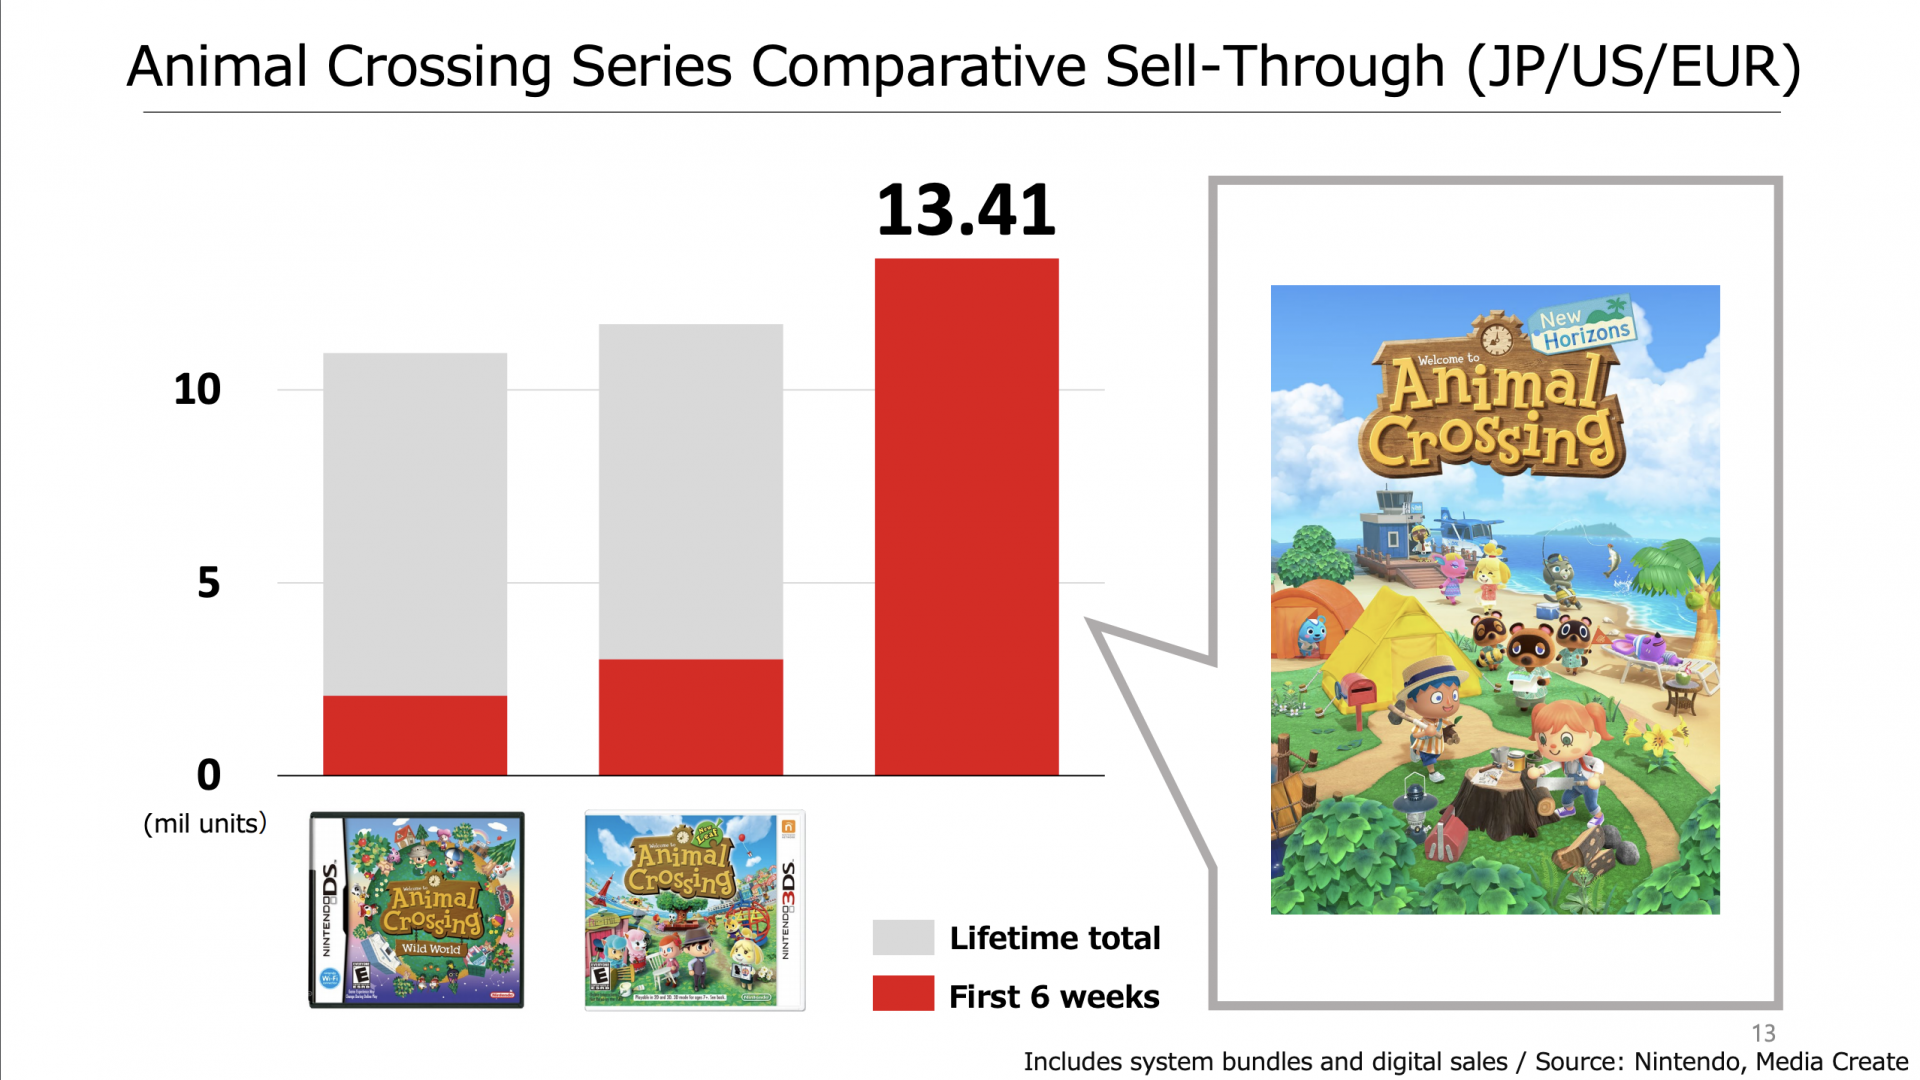 Animal Crossing sales